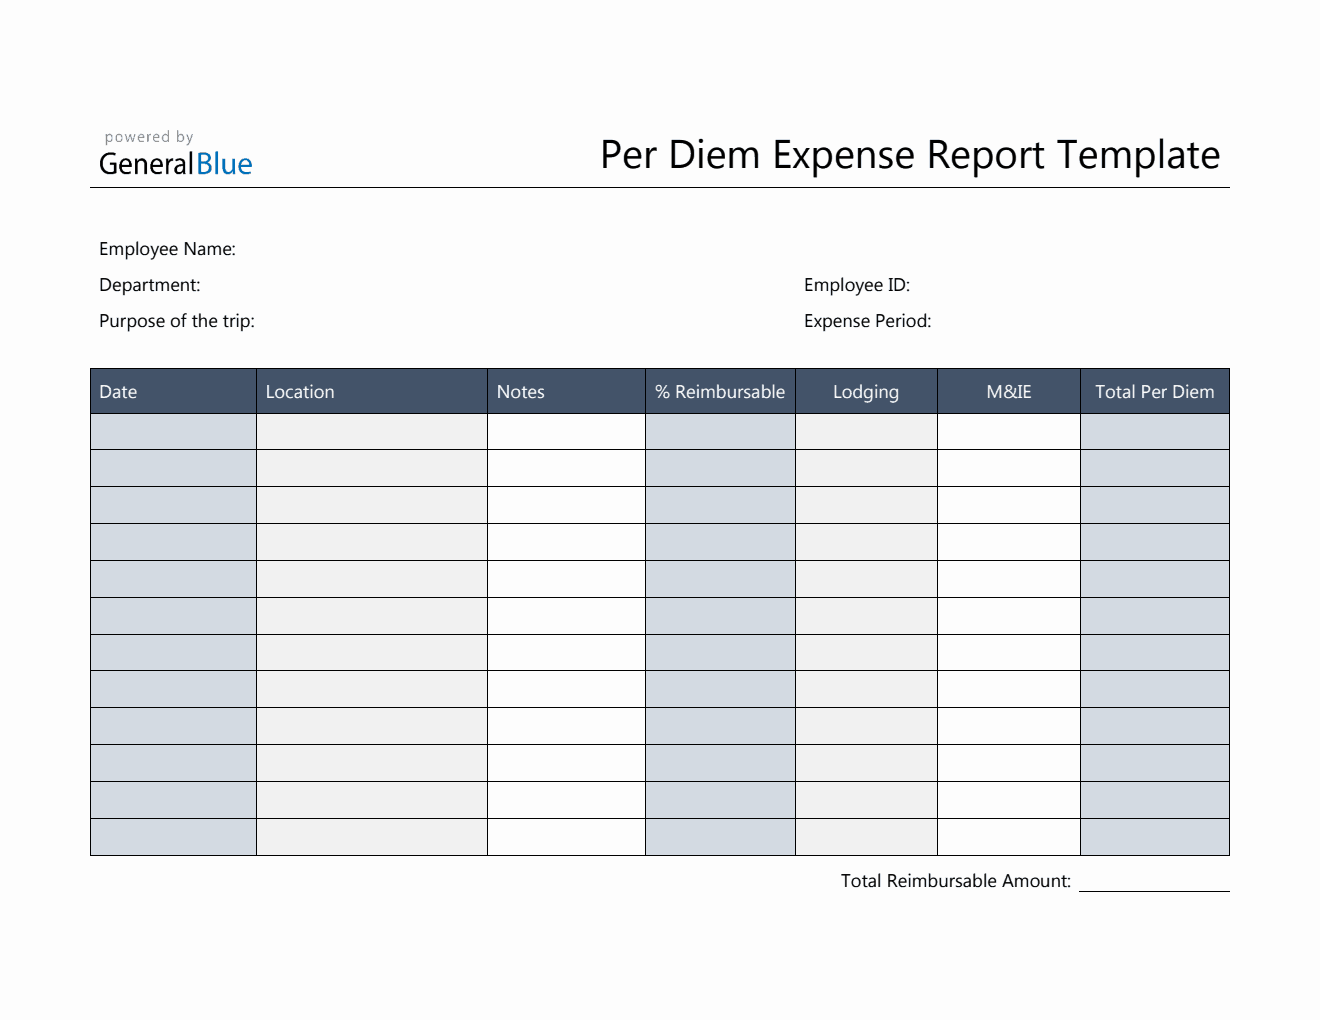 Editable Per Diem Expense Report in Word